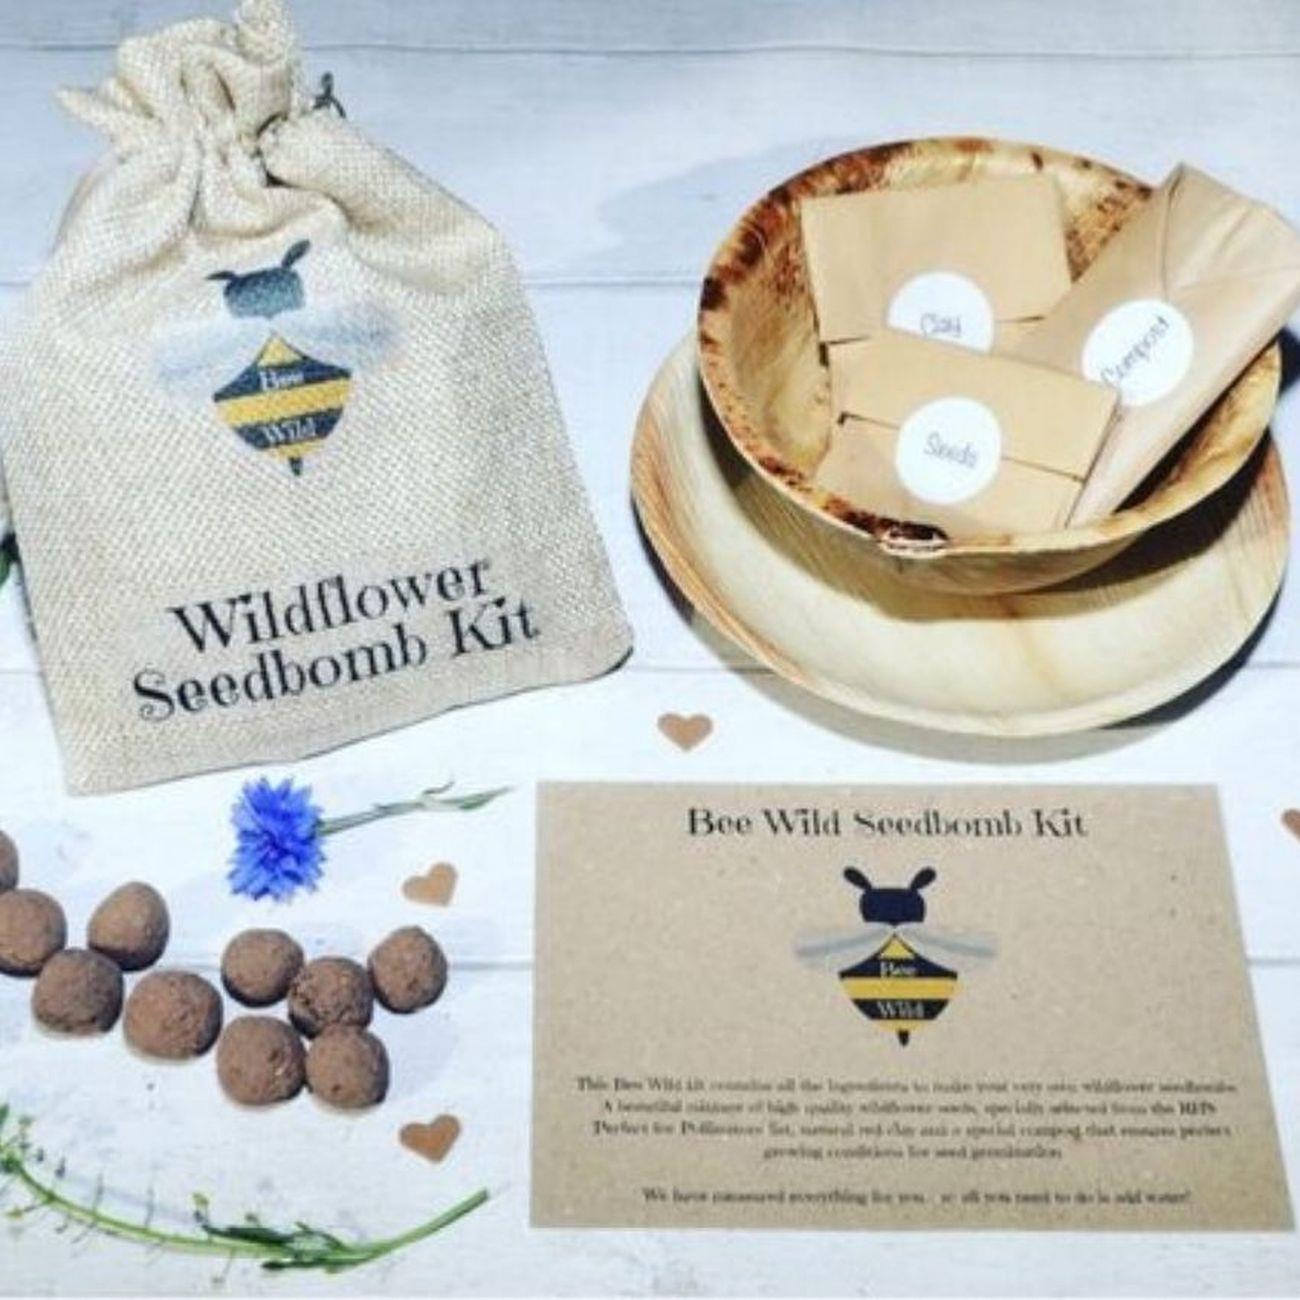 Wildflower Seedbomb Kit